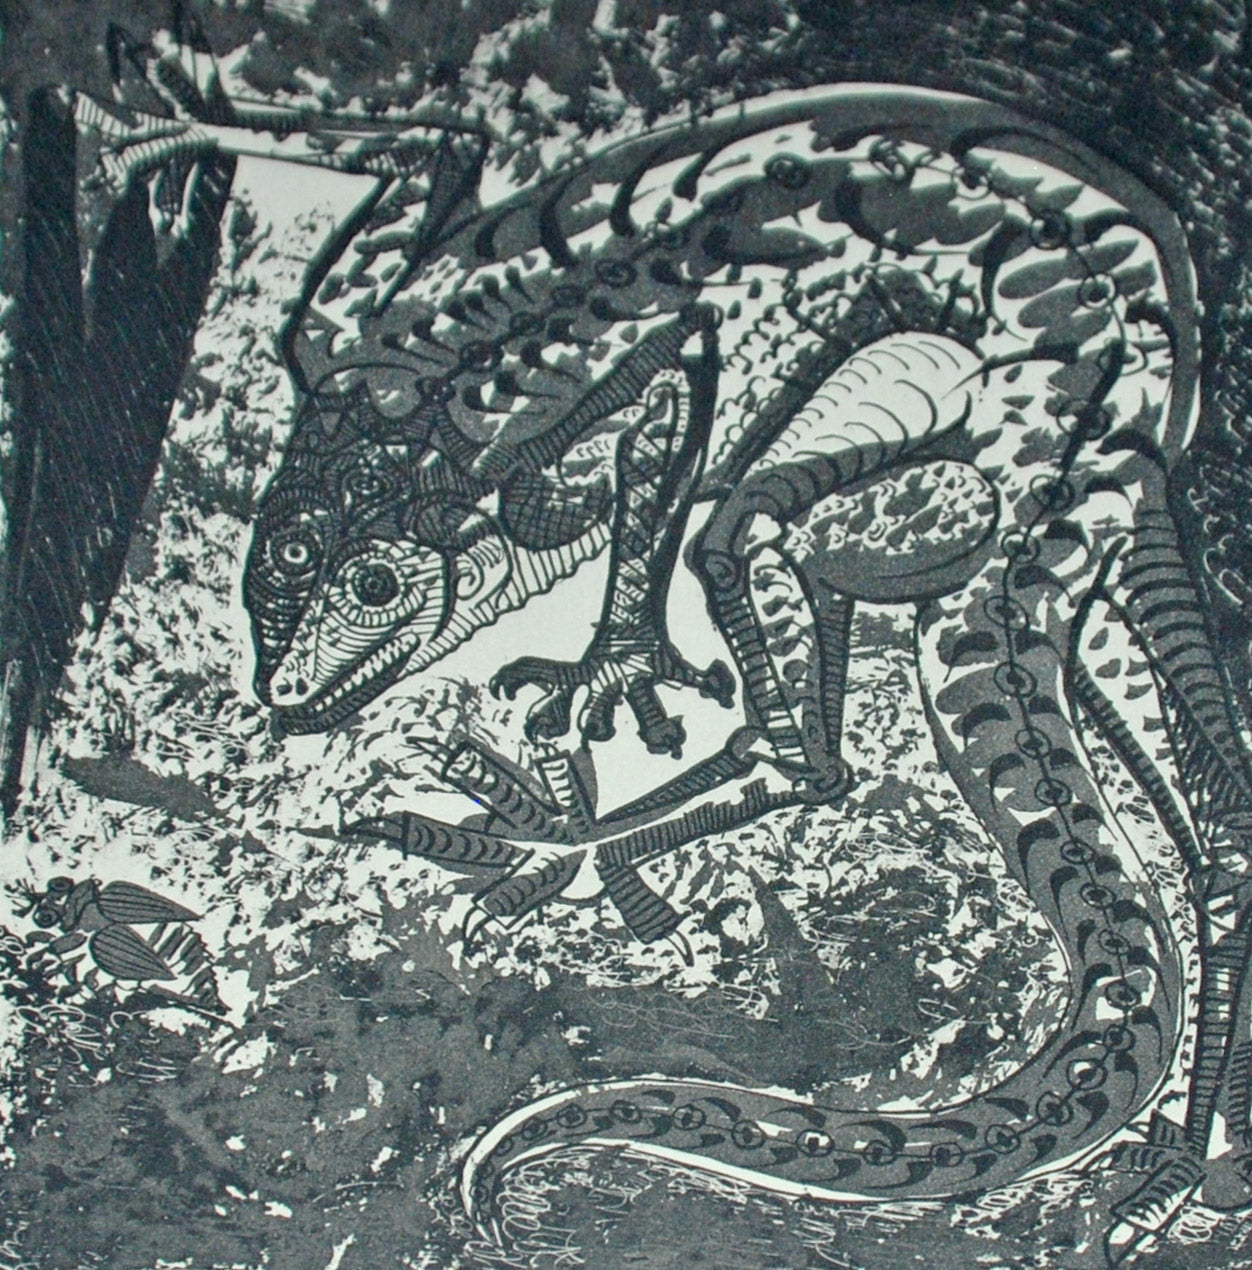 Pablo Picasso Le Lezard (The Lizard) (Bloch 344, Cramer No. 37) 1942